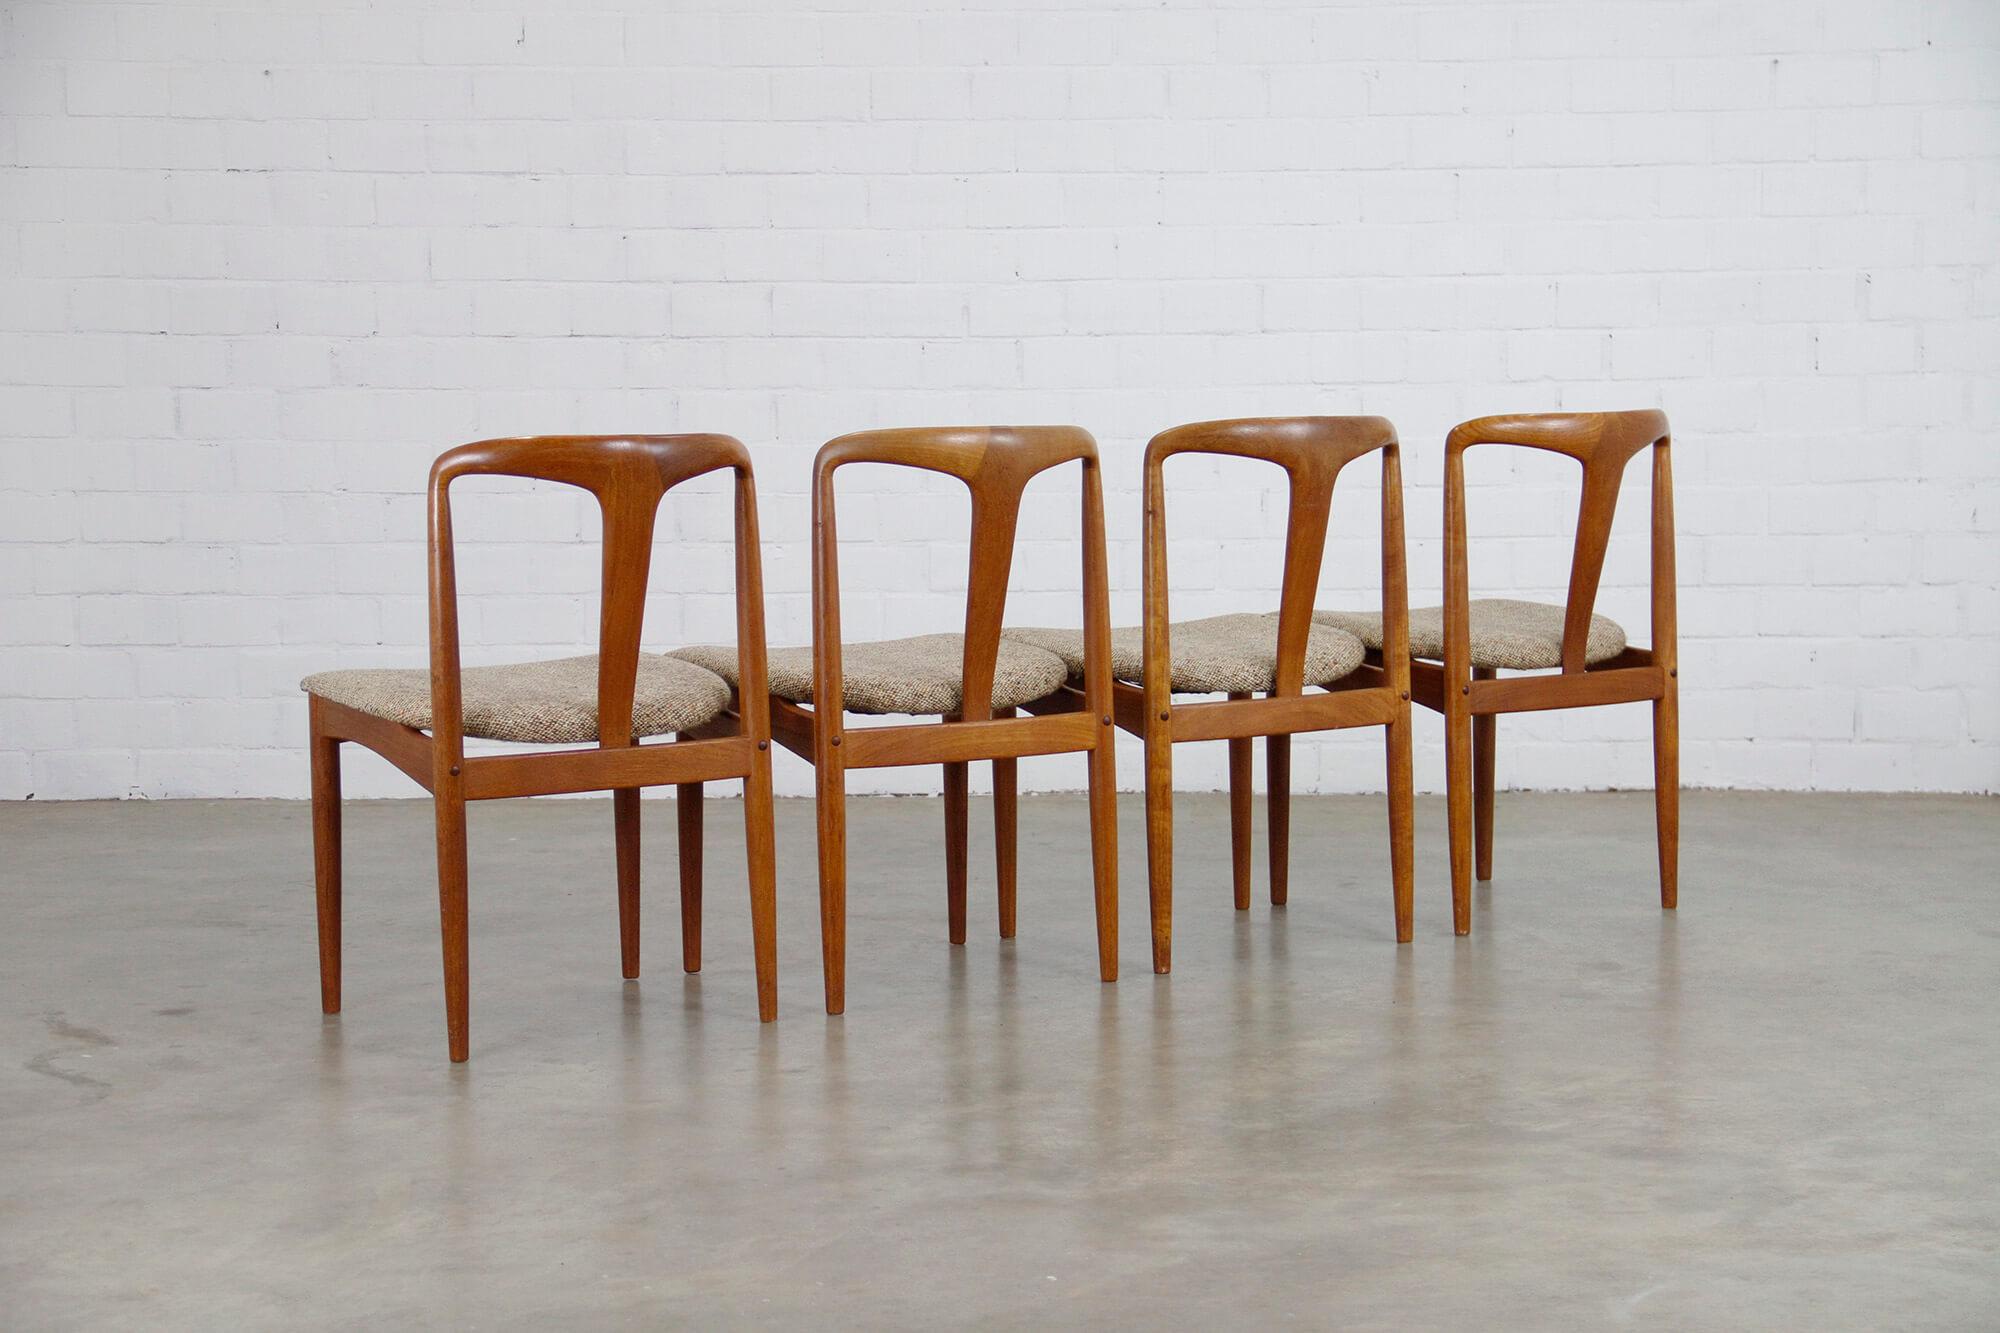 Four teak chairs designed by Johannes Andersen for Uldum Møbelfabrik, Denmark.
With the original upholstery.